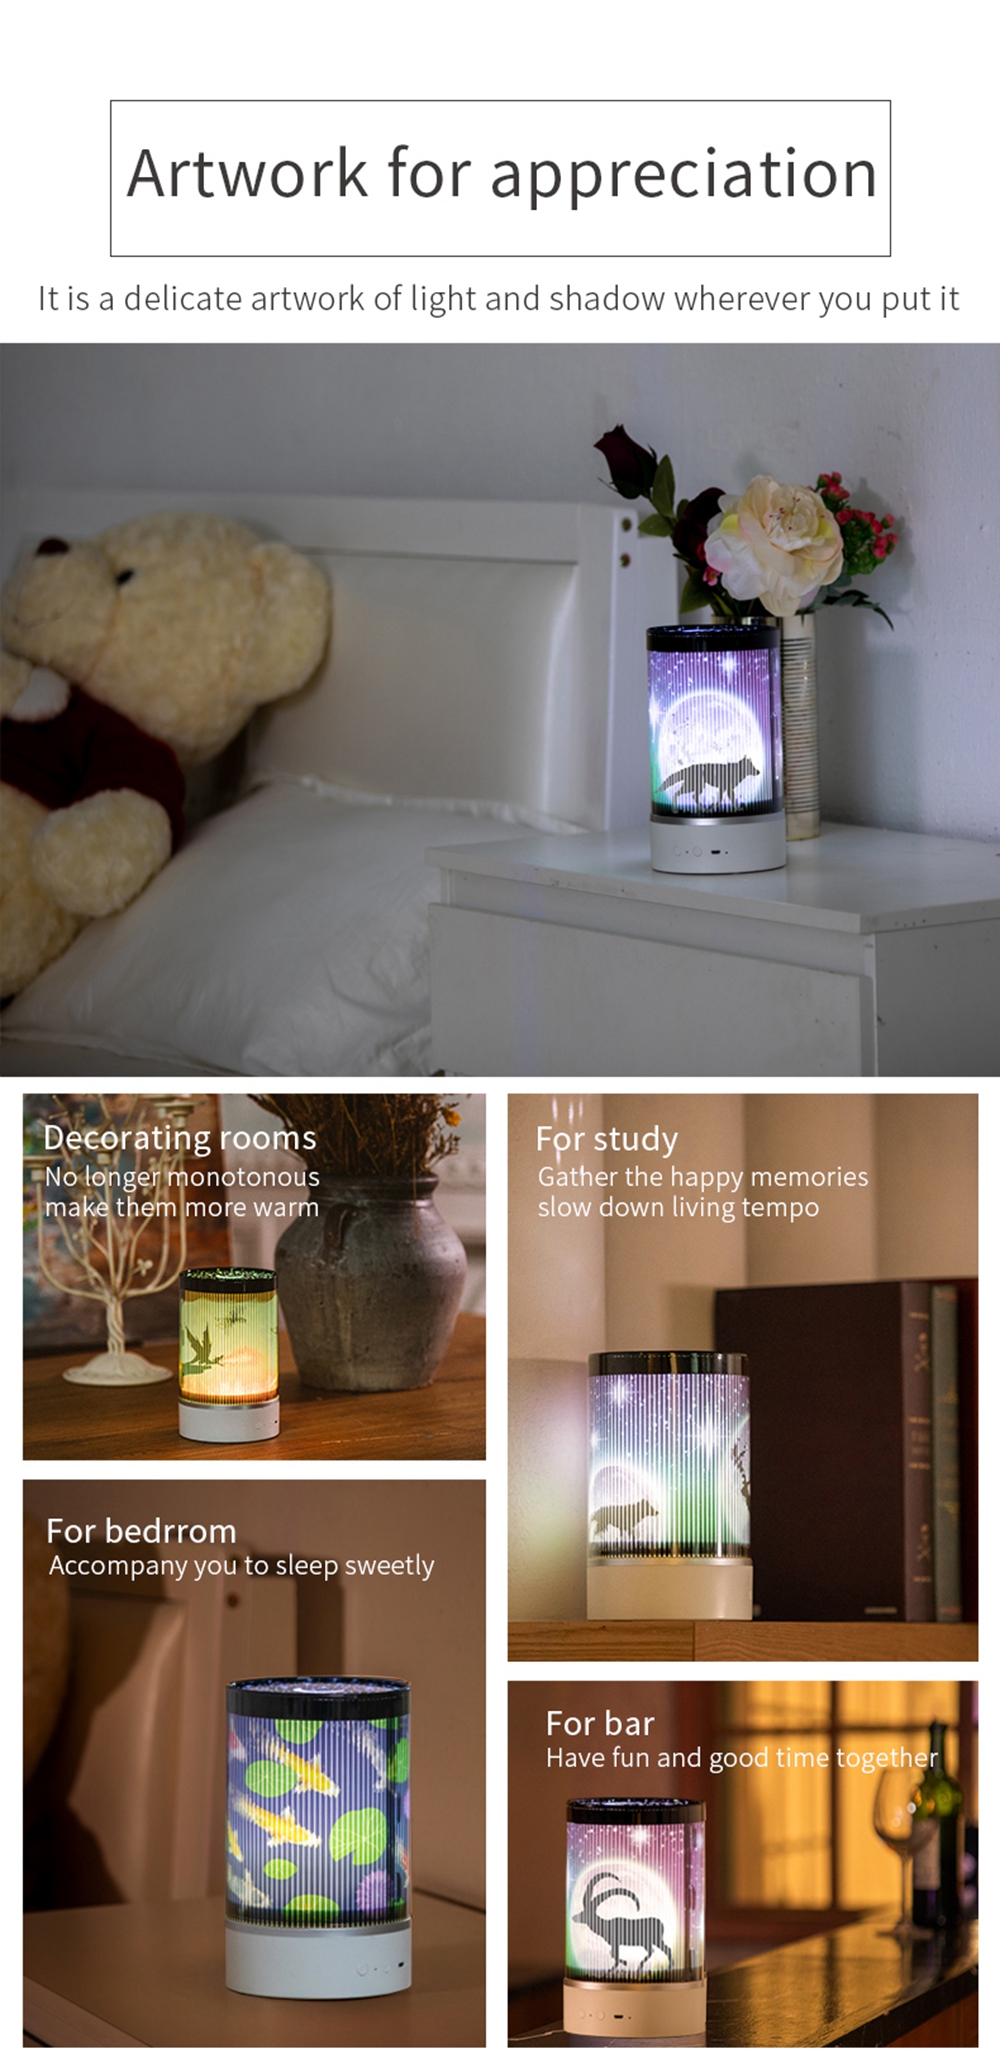 DC5V USB LED 4 Pattern Animated Night Light Remote Control for Kids Bedroom